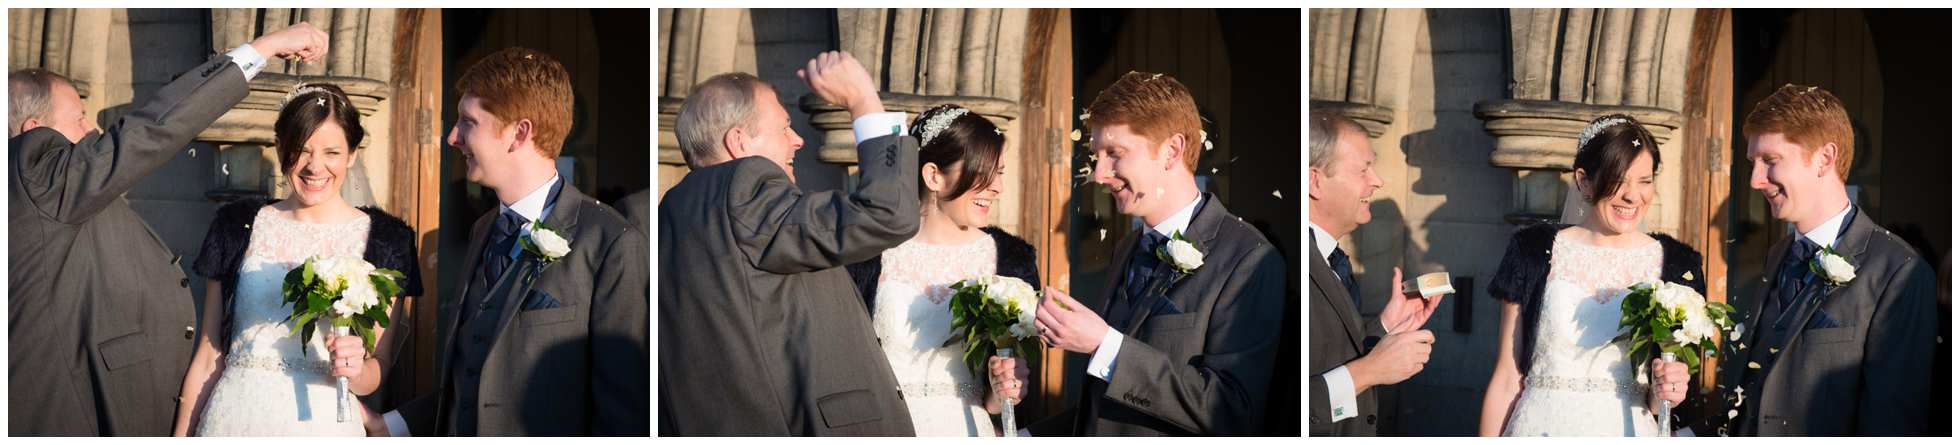 Confetti throwing galore St Paul's Church York Wedding Photography